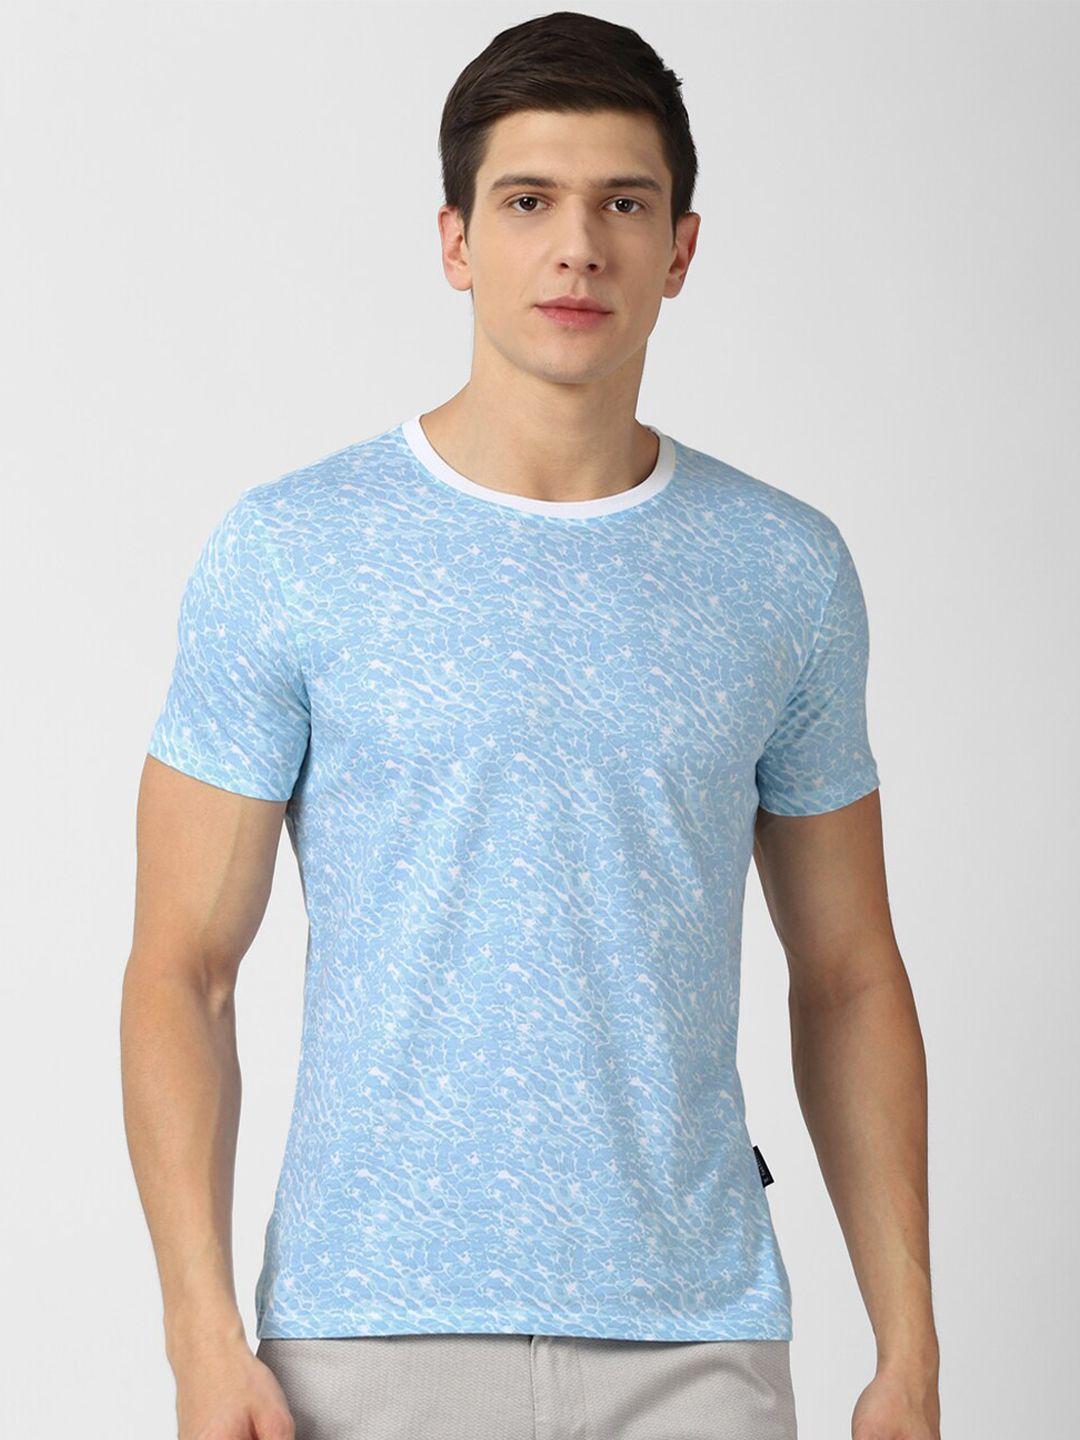 v dot men blue & white printed round neck cotton slim fit t-shirt